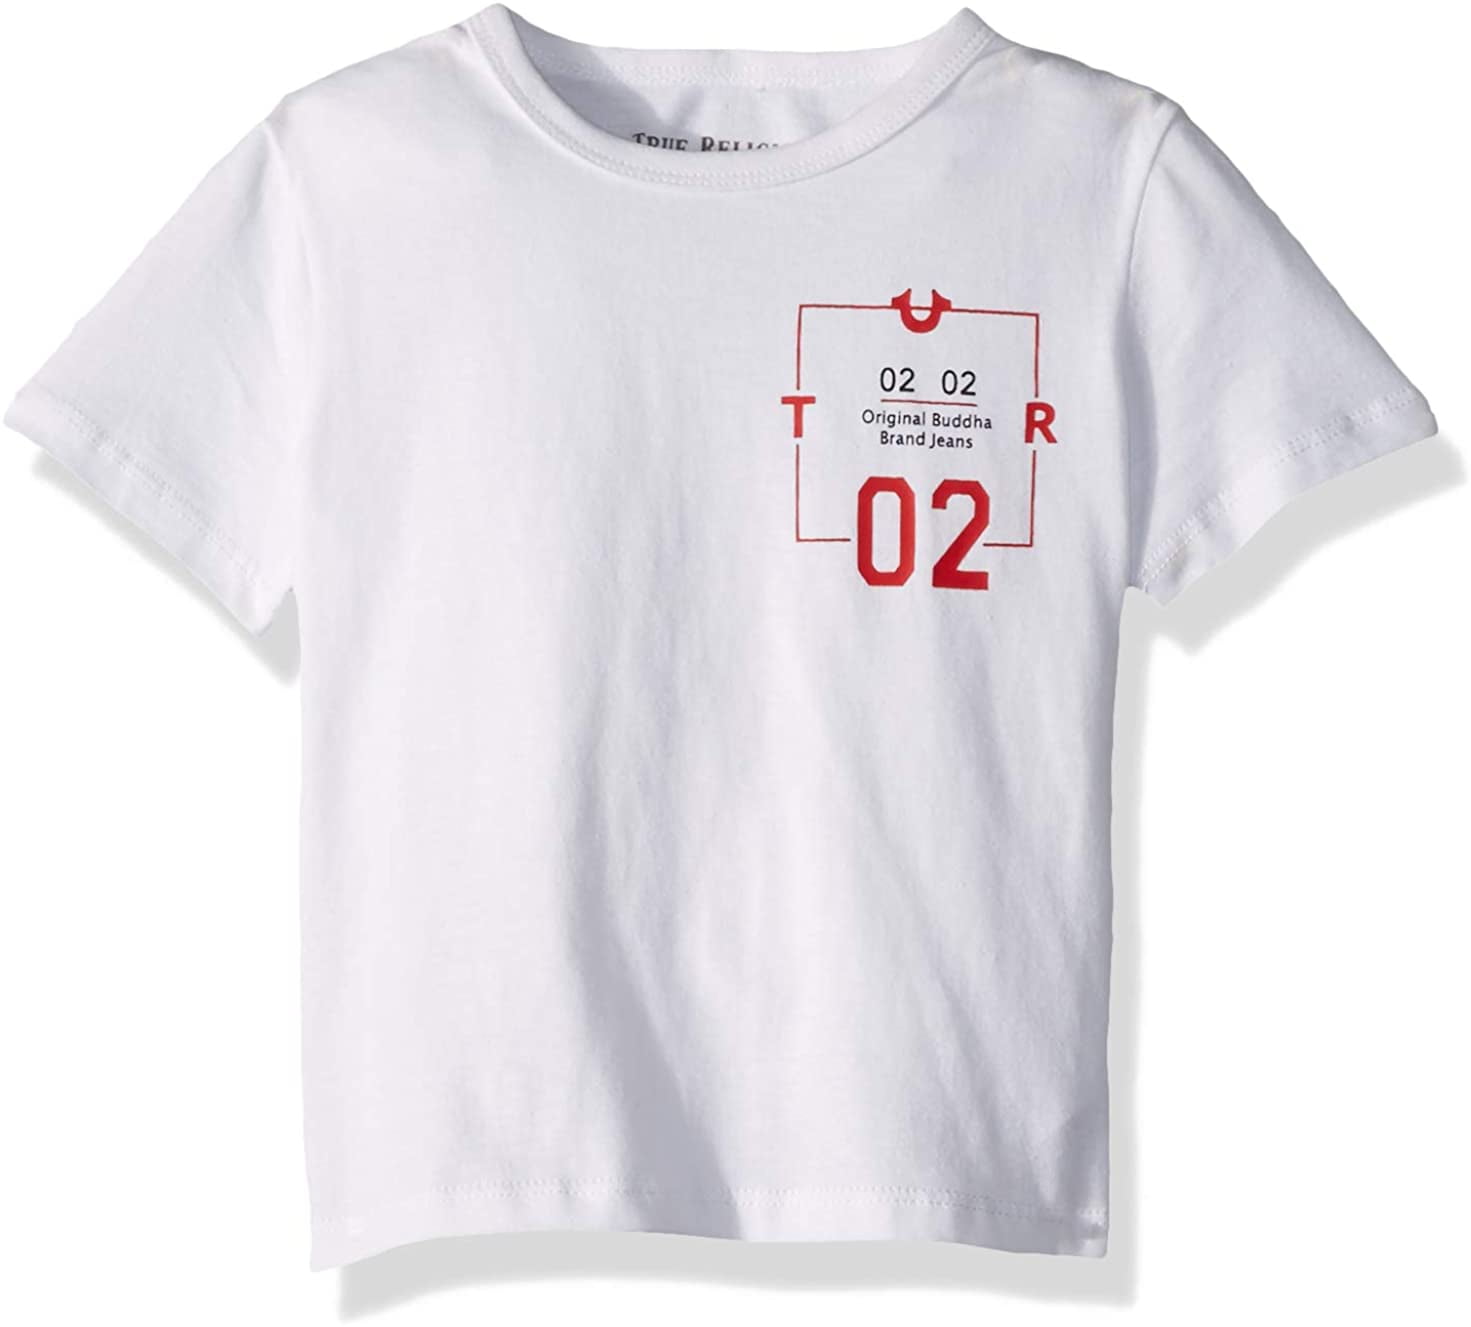 True Religion Boys' Toddler Logo Tee Shirt, White, 2T | Walmart Canada